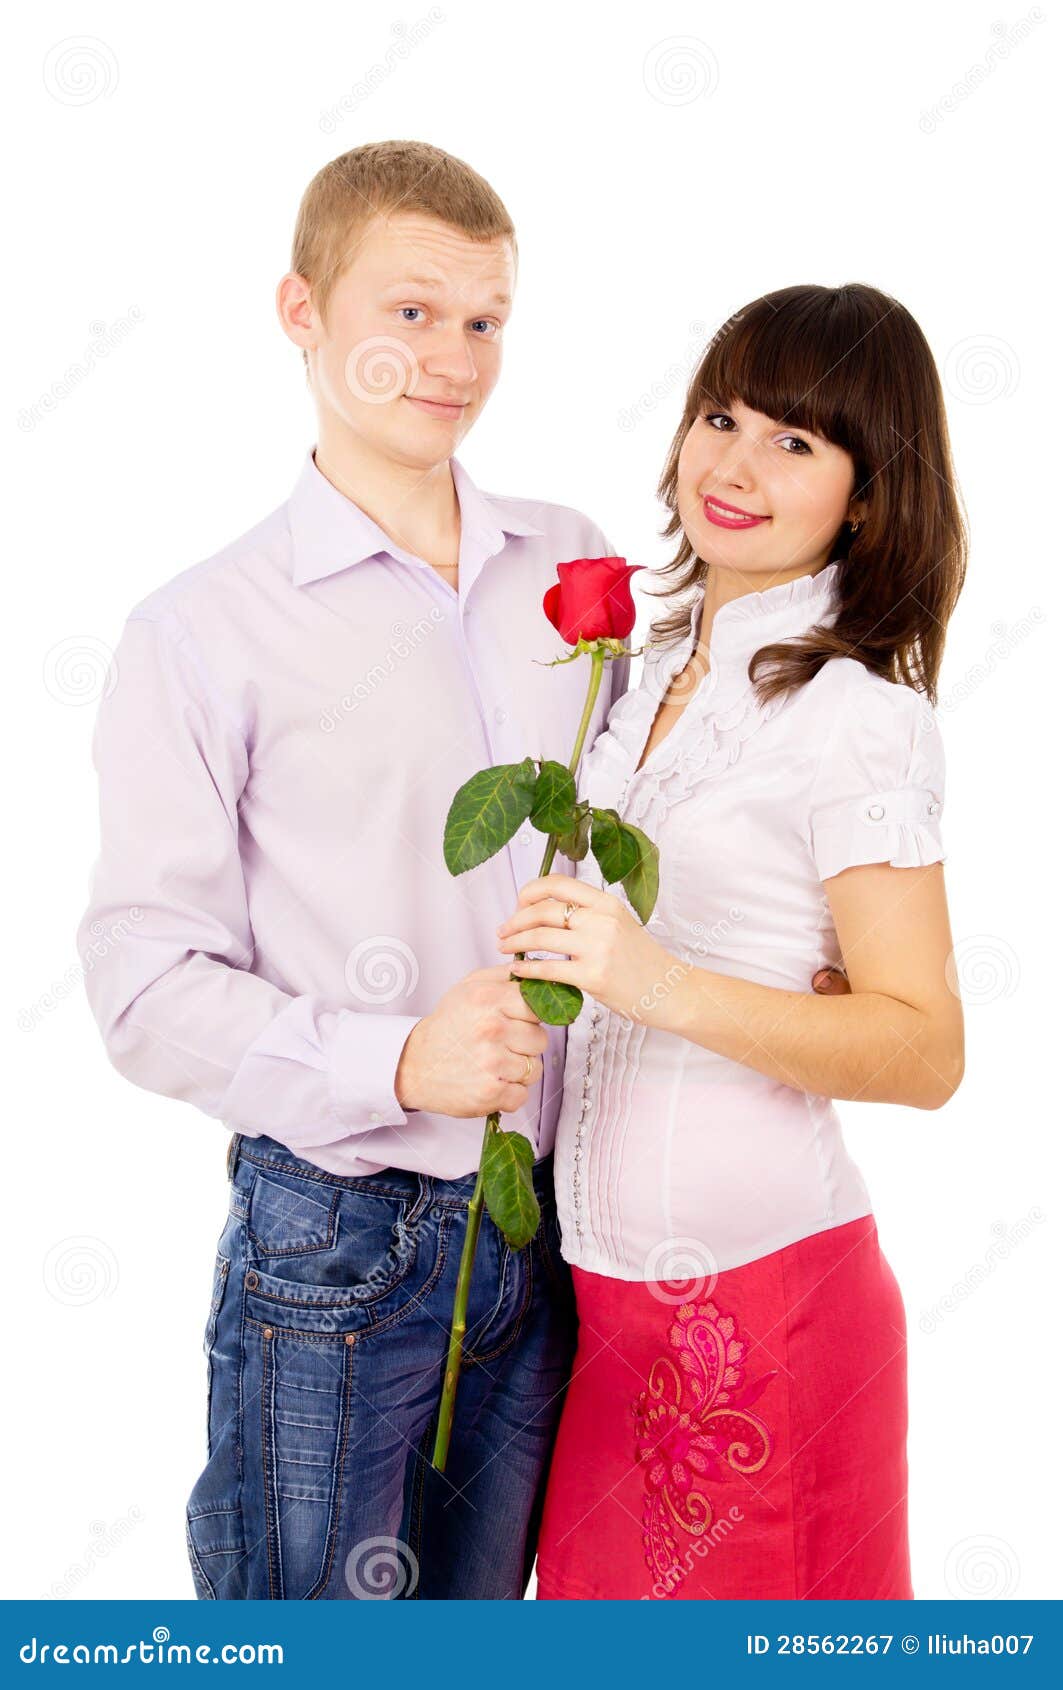 https://thumbs.dreamstime.com/z/guy-makes-proposal-to-girl-rose-28562267.jpg